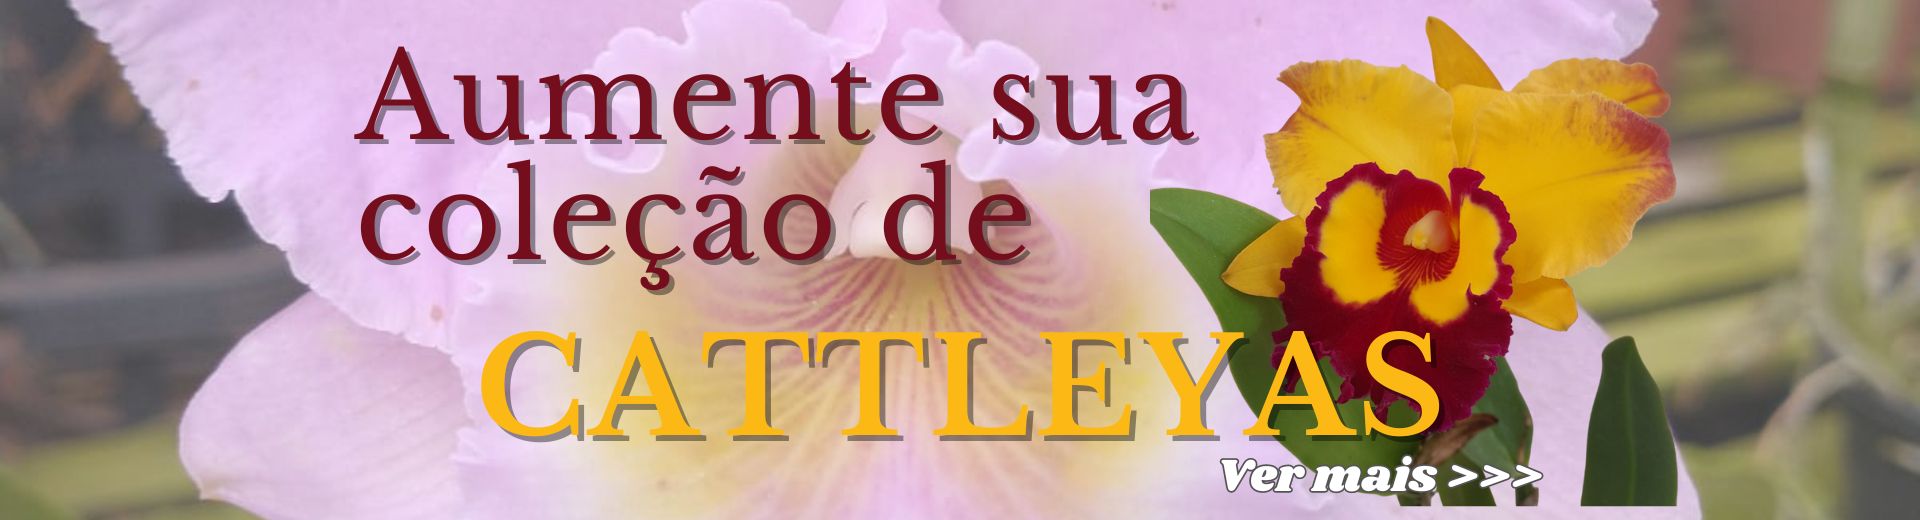 Cattleyas